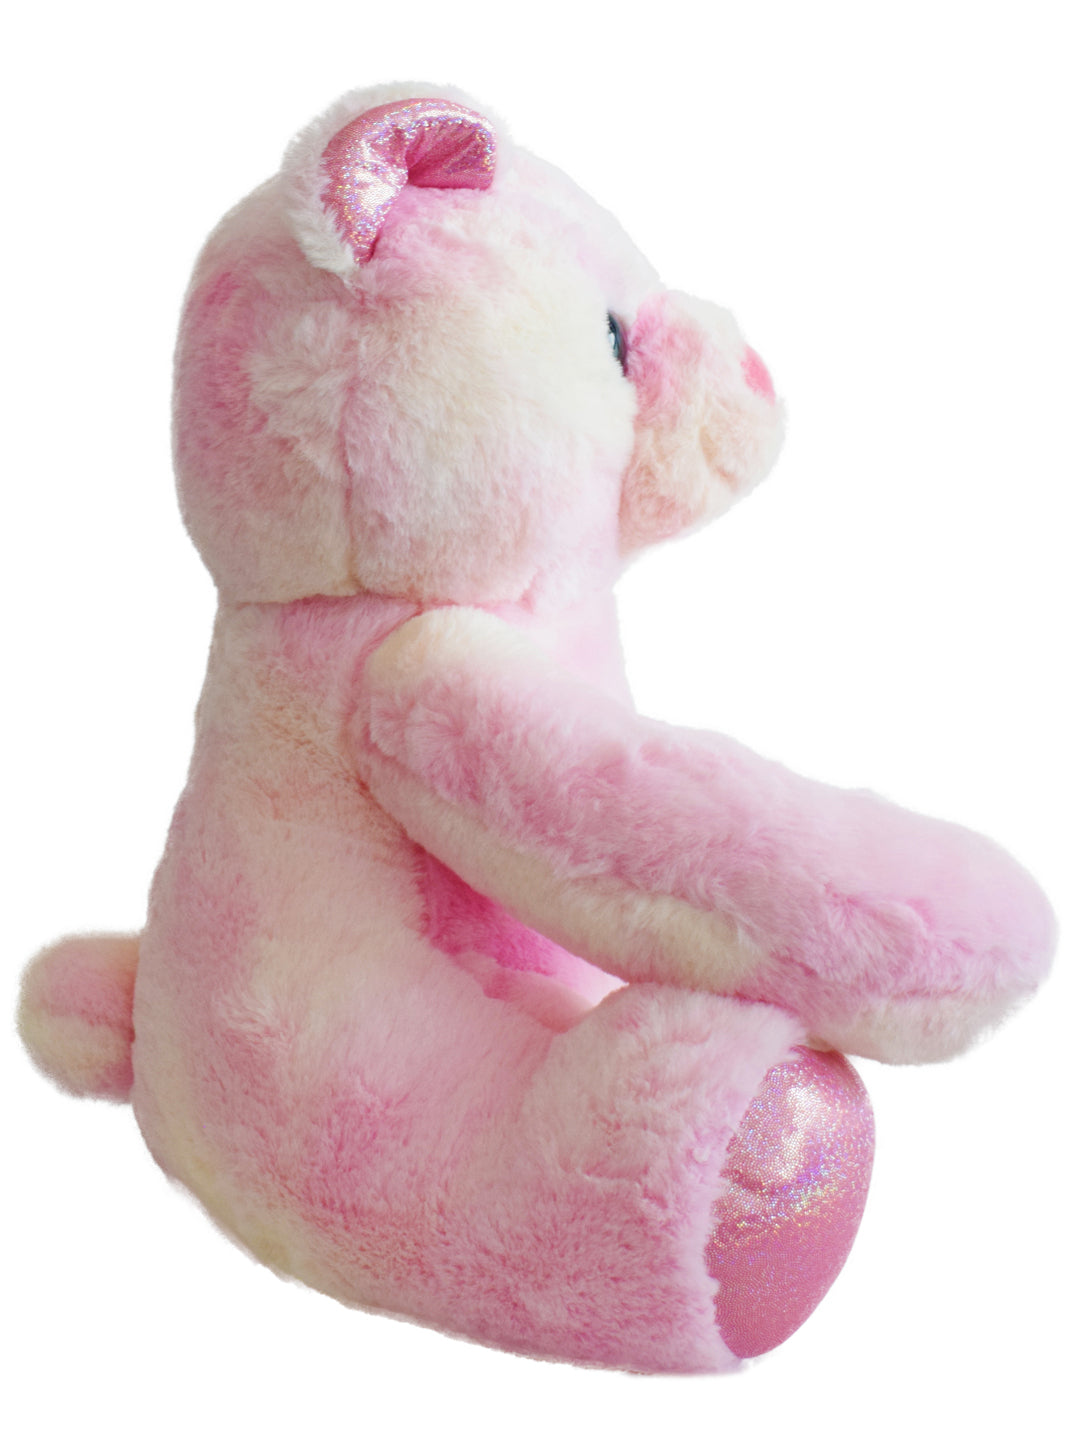 Mirada Plush Stuffed Tie Dye Pink Teddy Bear with Glitter Eye Soft Toy - 35cm